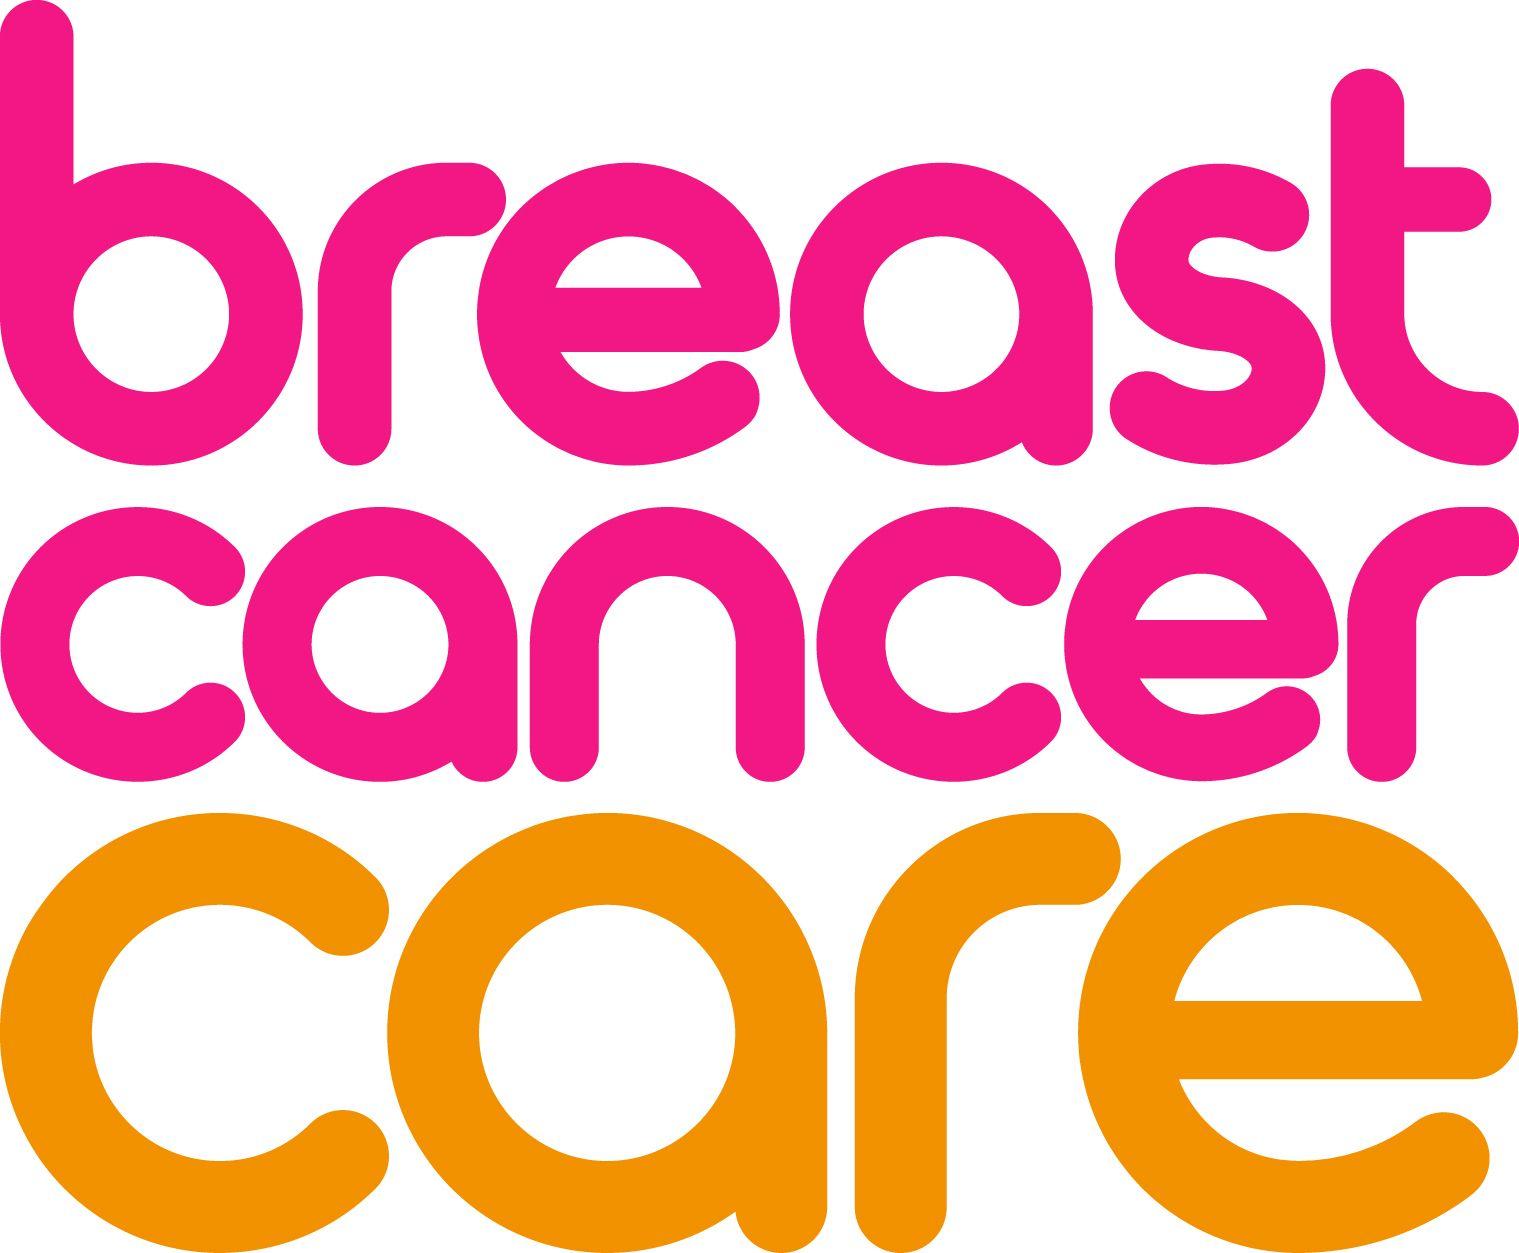 Care.org Logo - File:UK charity Breast Cancer Care logo.jpg